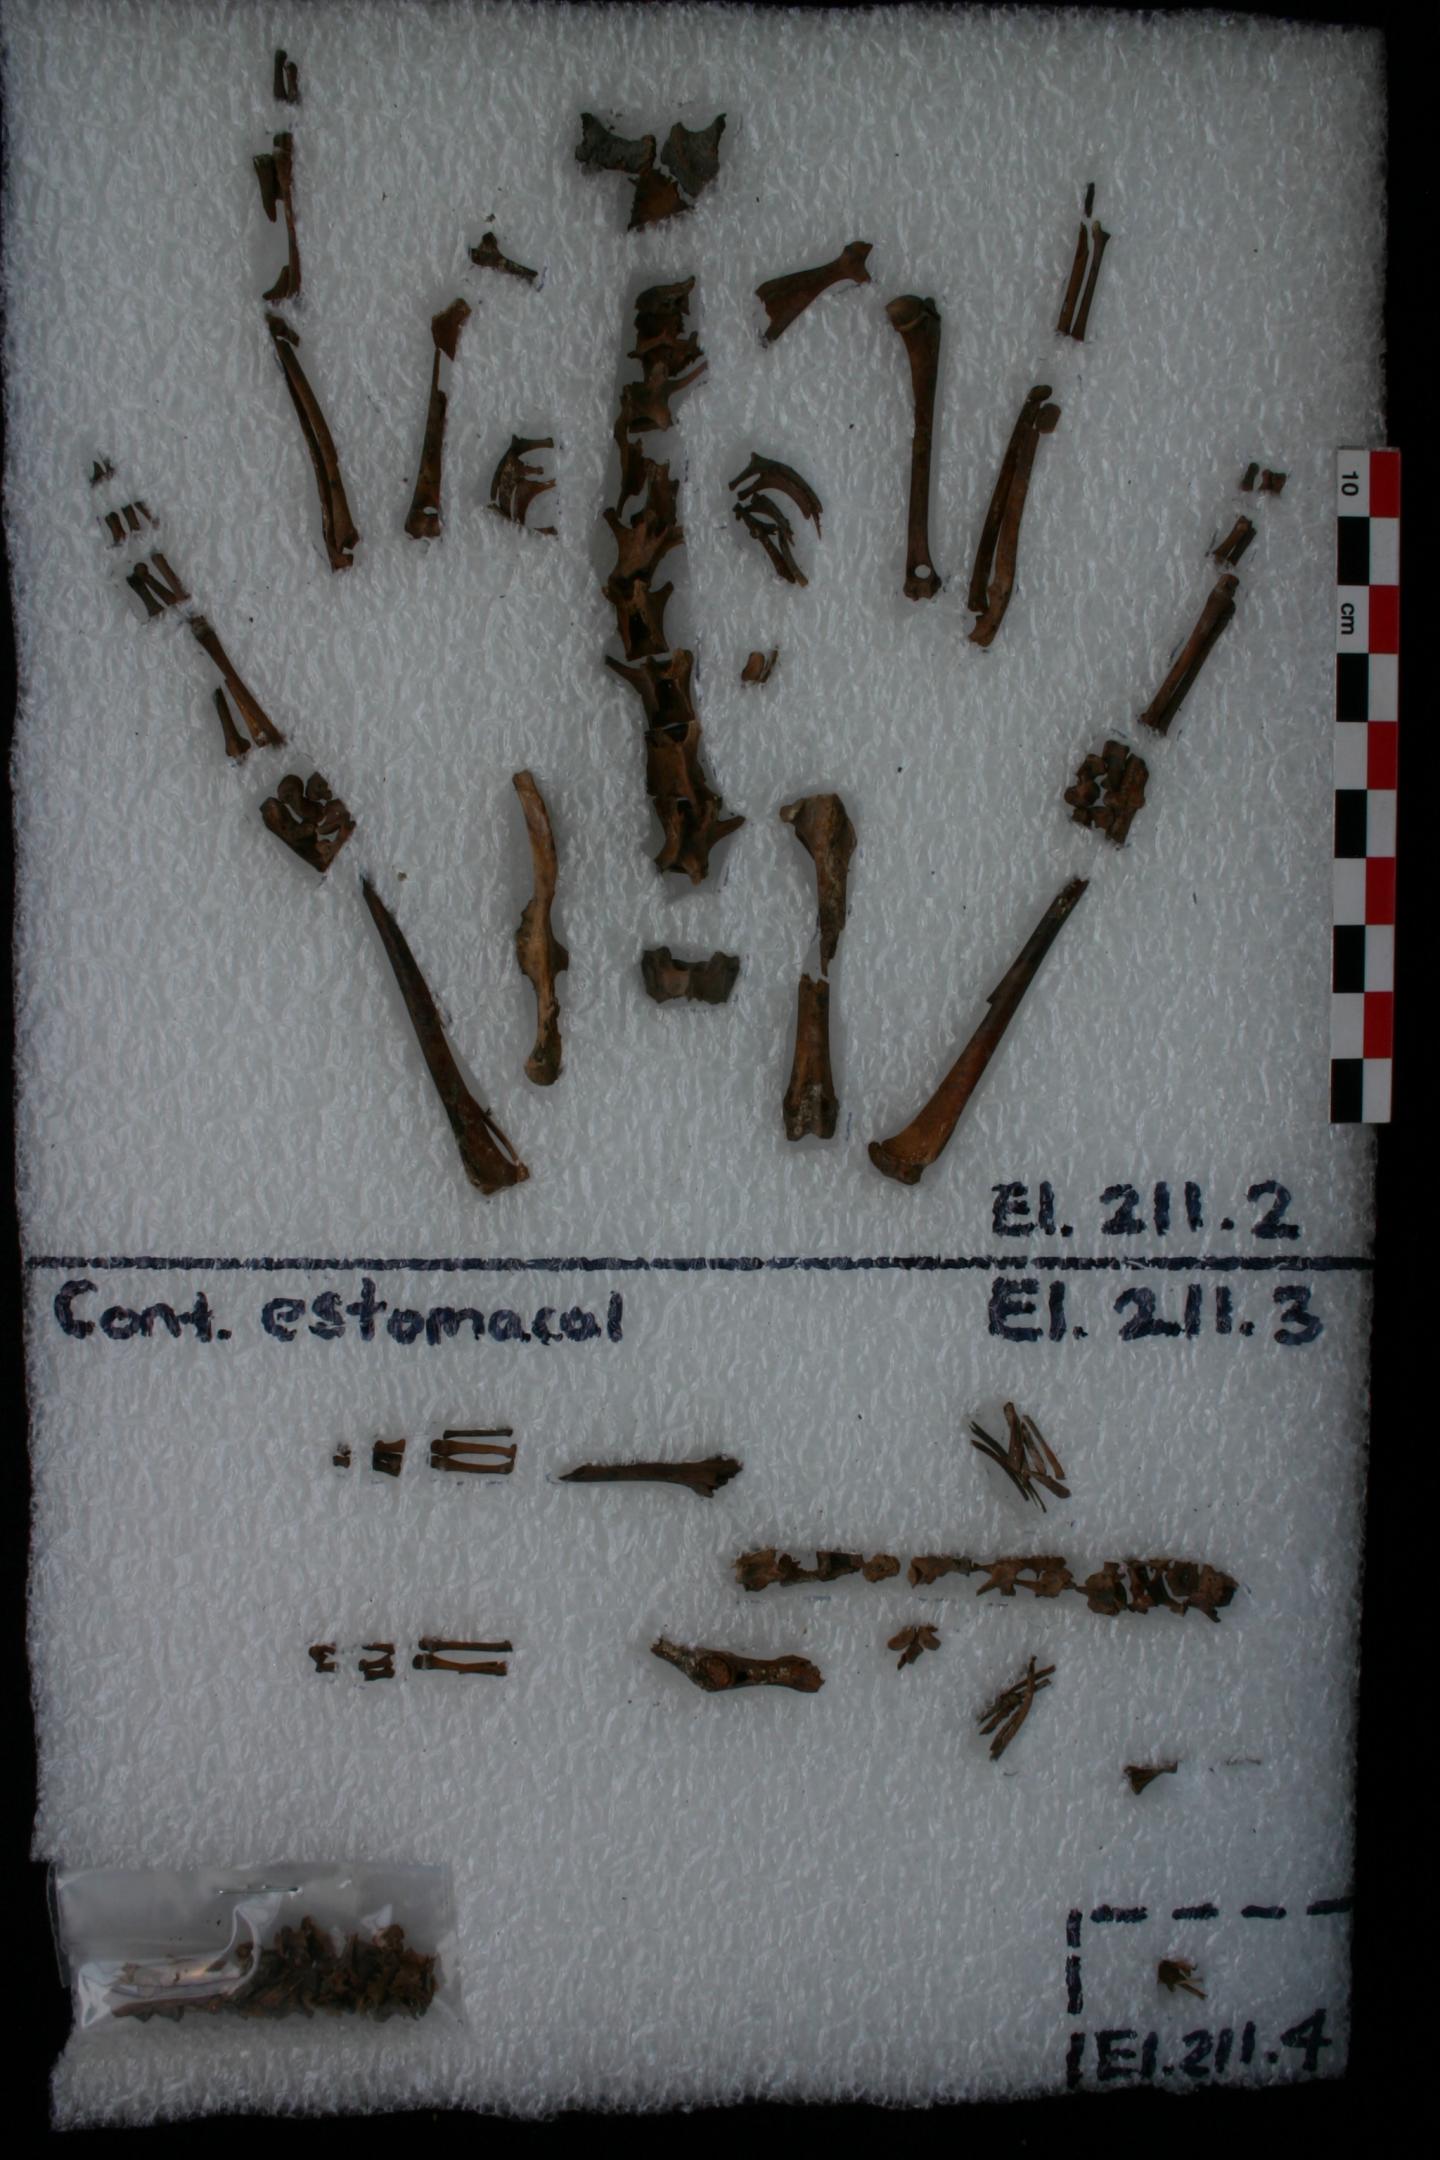 Rabbit bones found in sacrificial eagle stomach